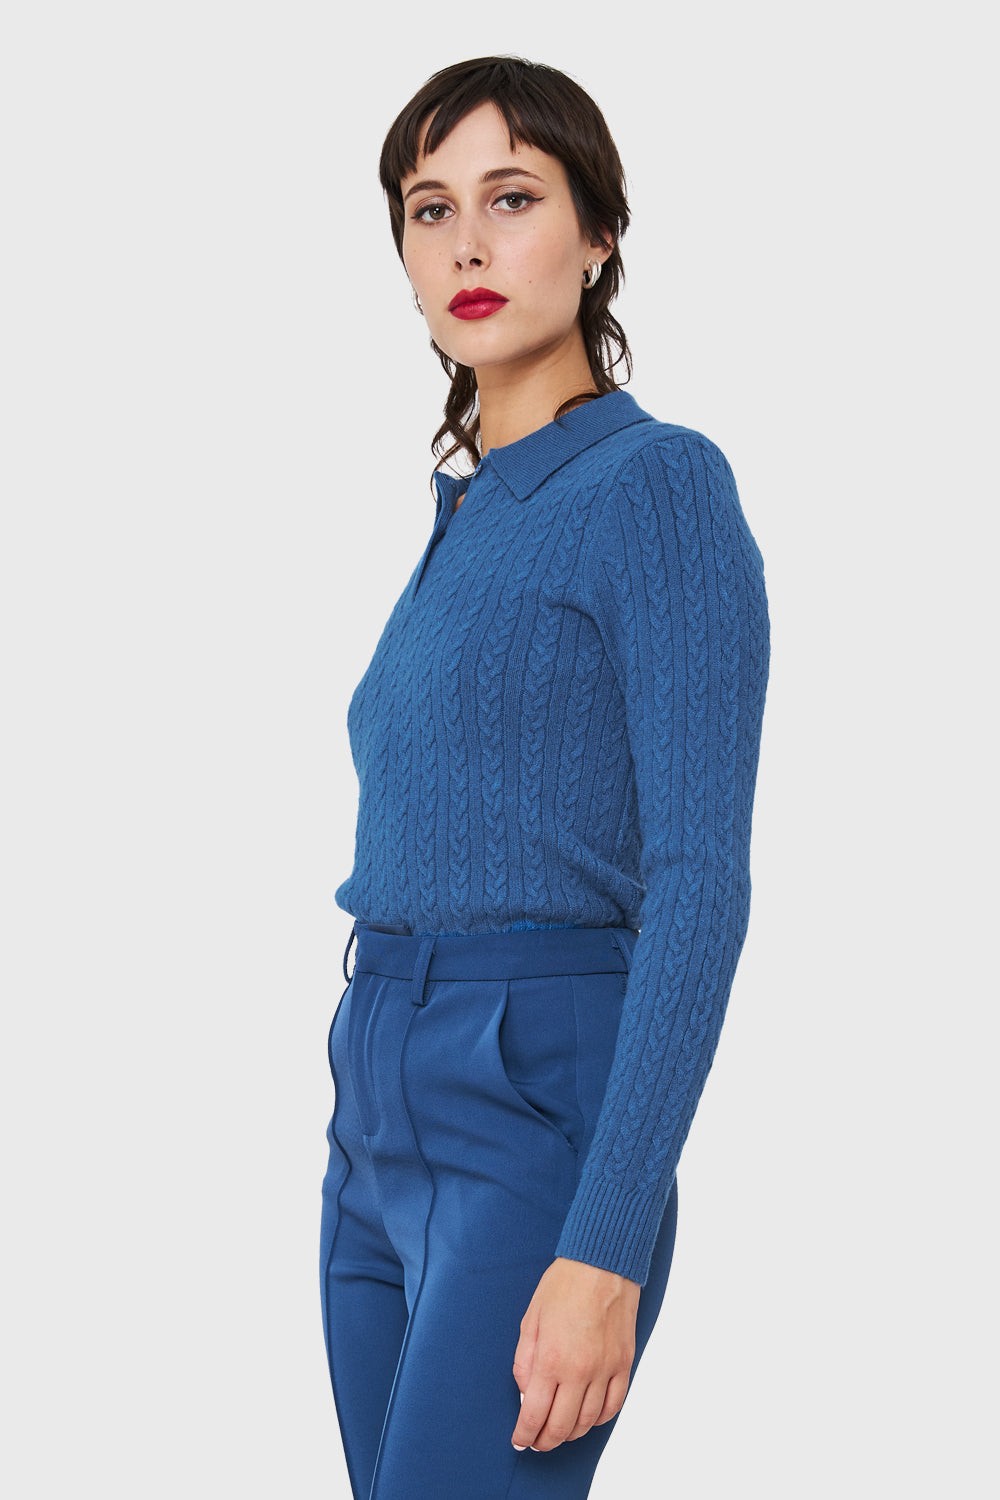 Sweater Cuello Camisero Cadenetas Azul índigo